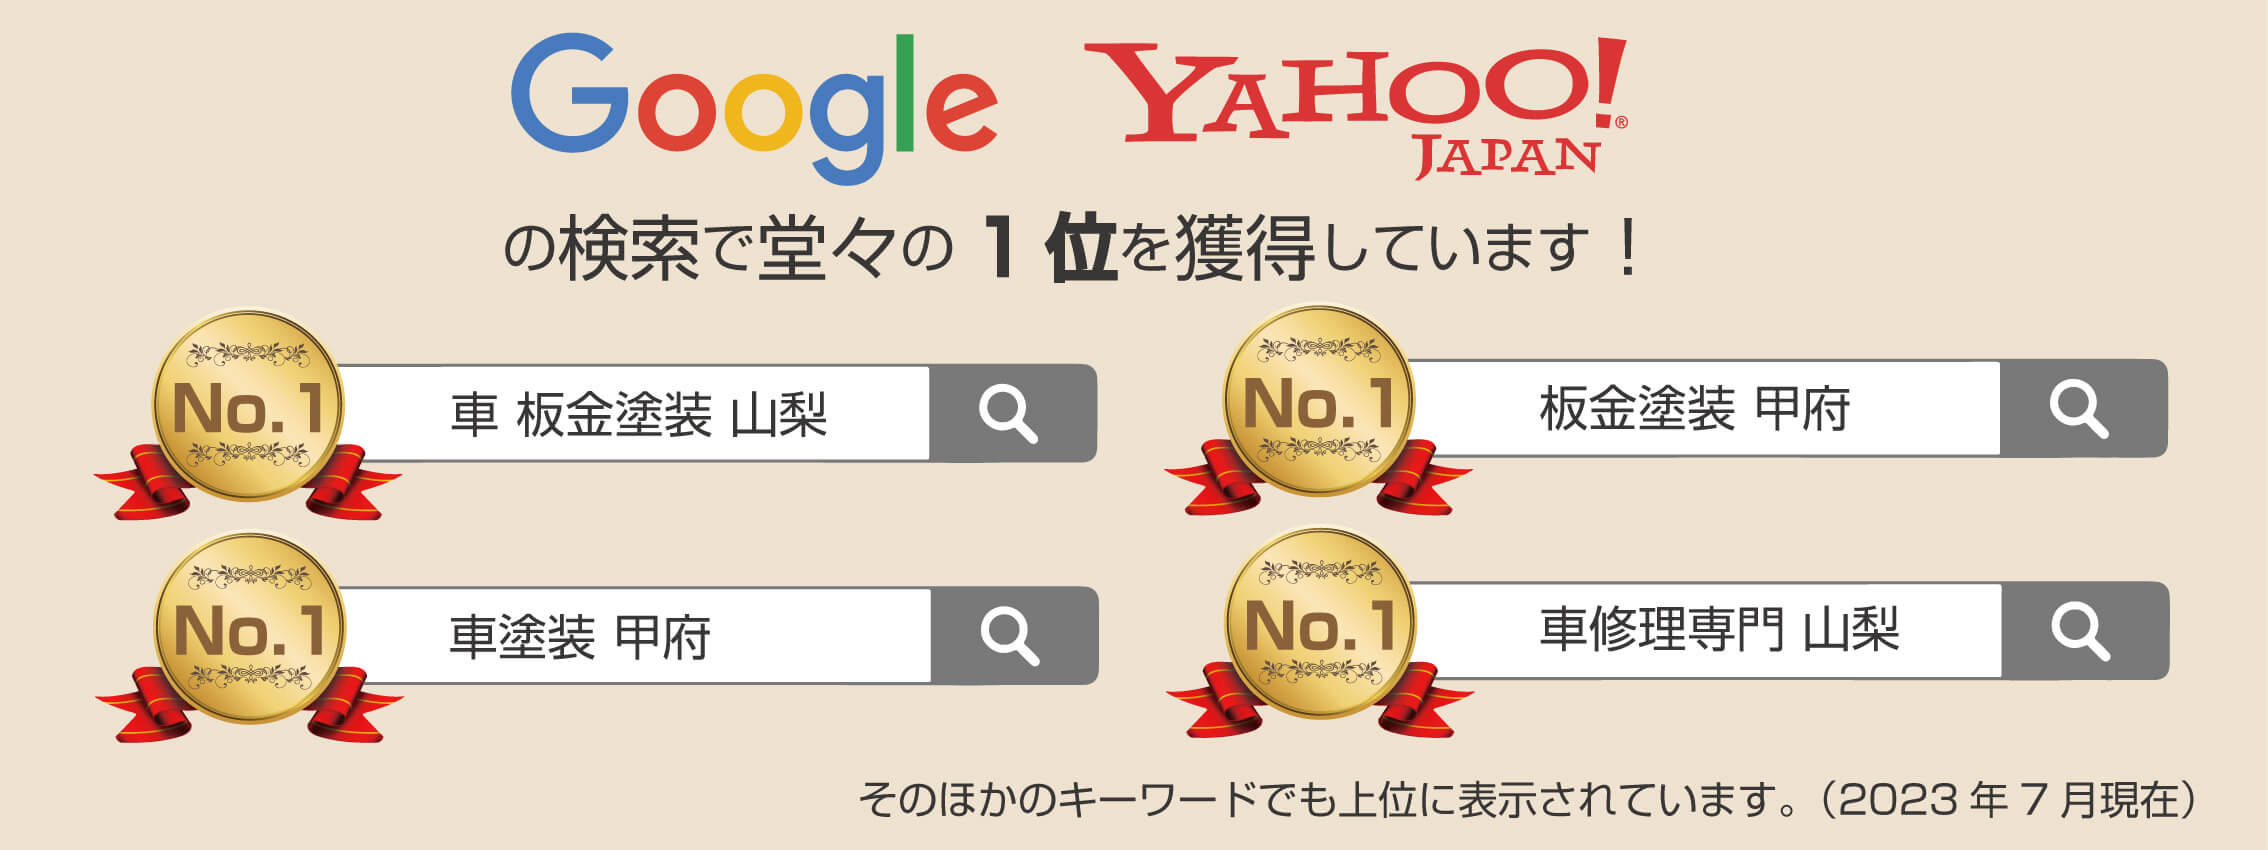 Google検索、Yahoo検索で堂々の1位を獲得しています